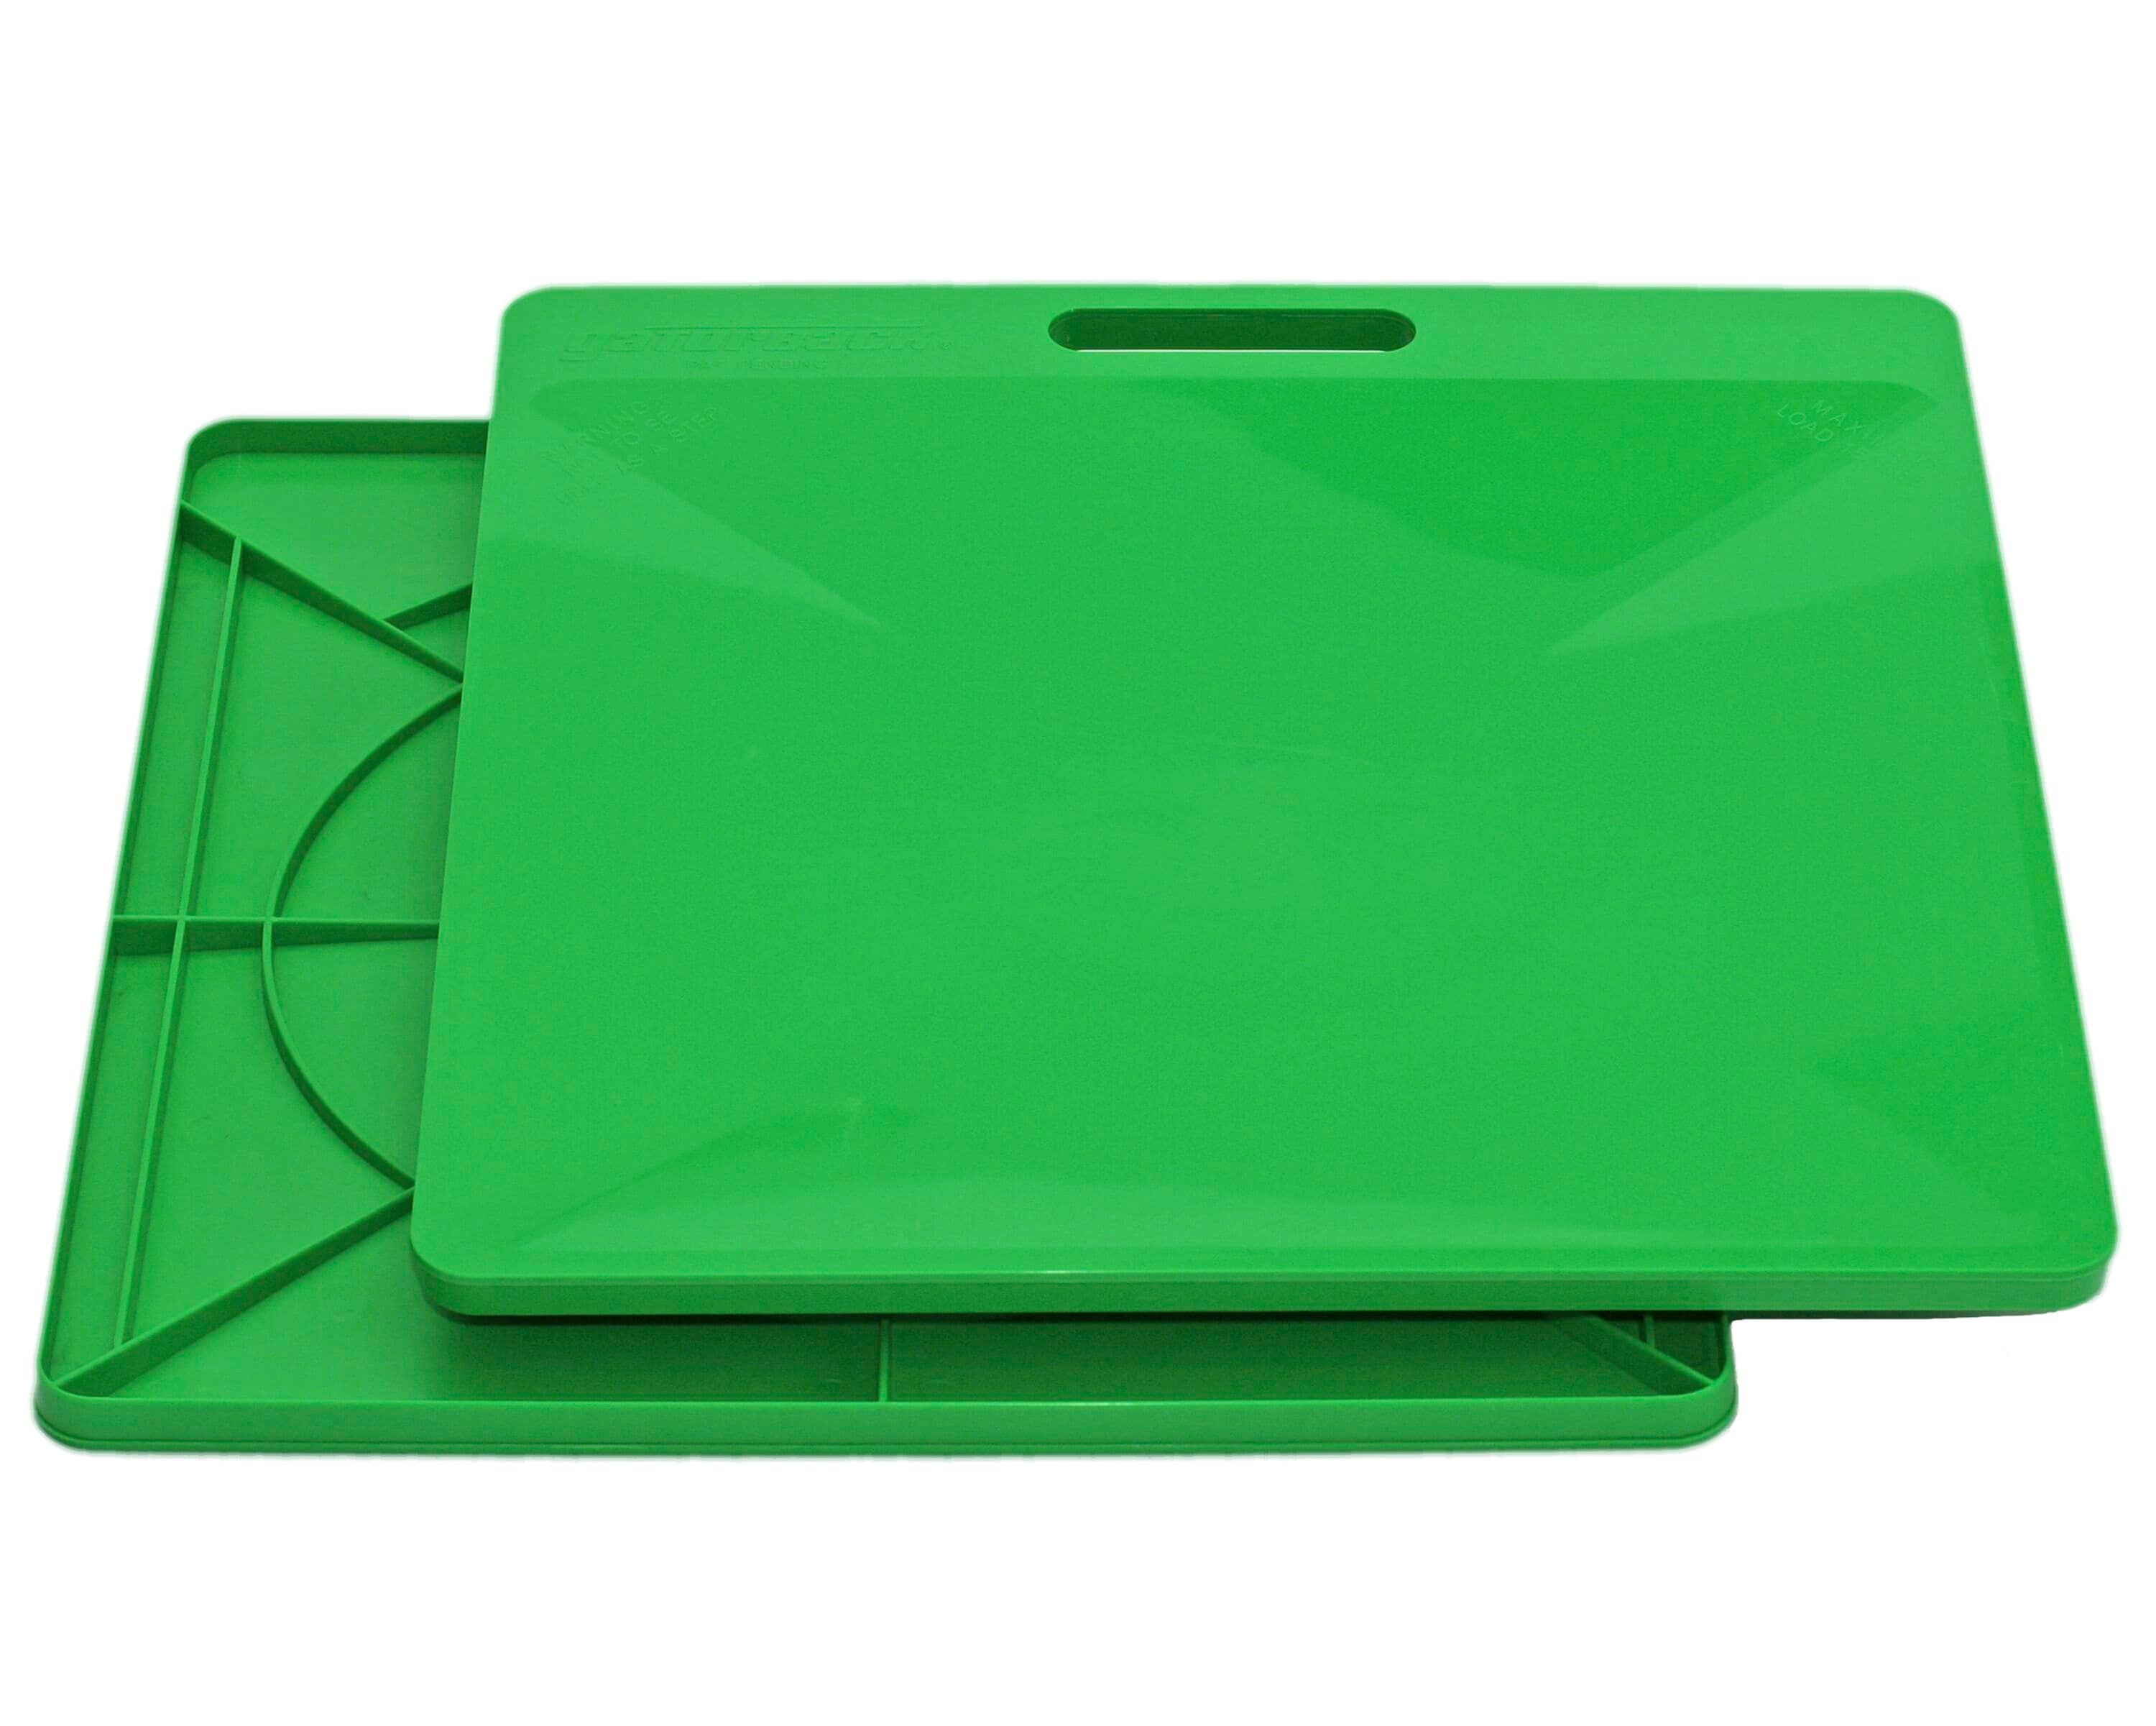 Folding Chopping Plastic Cutting Board, Kitchen Accessories: Maxi